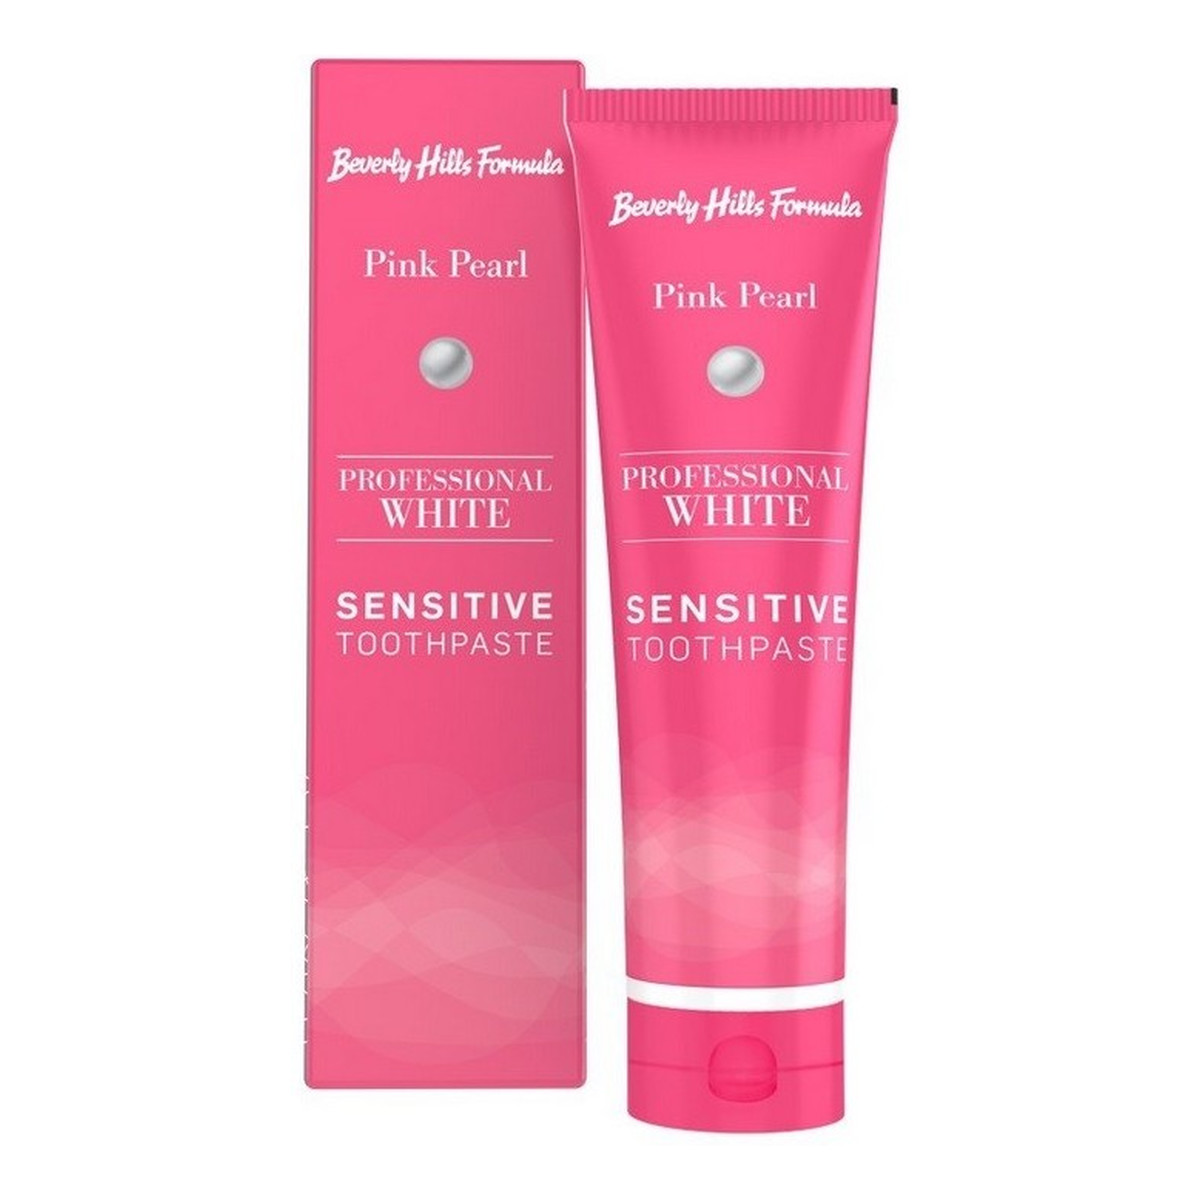 Beverly Hills Formula Pink Pearl Sensitive profesjonalne serum do zębów wrażliwych 100ml